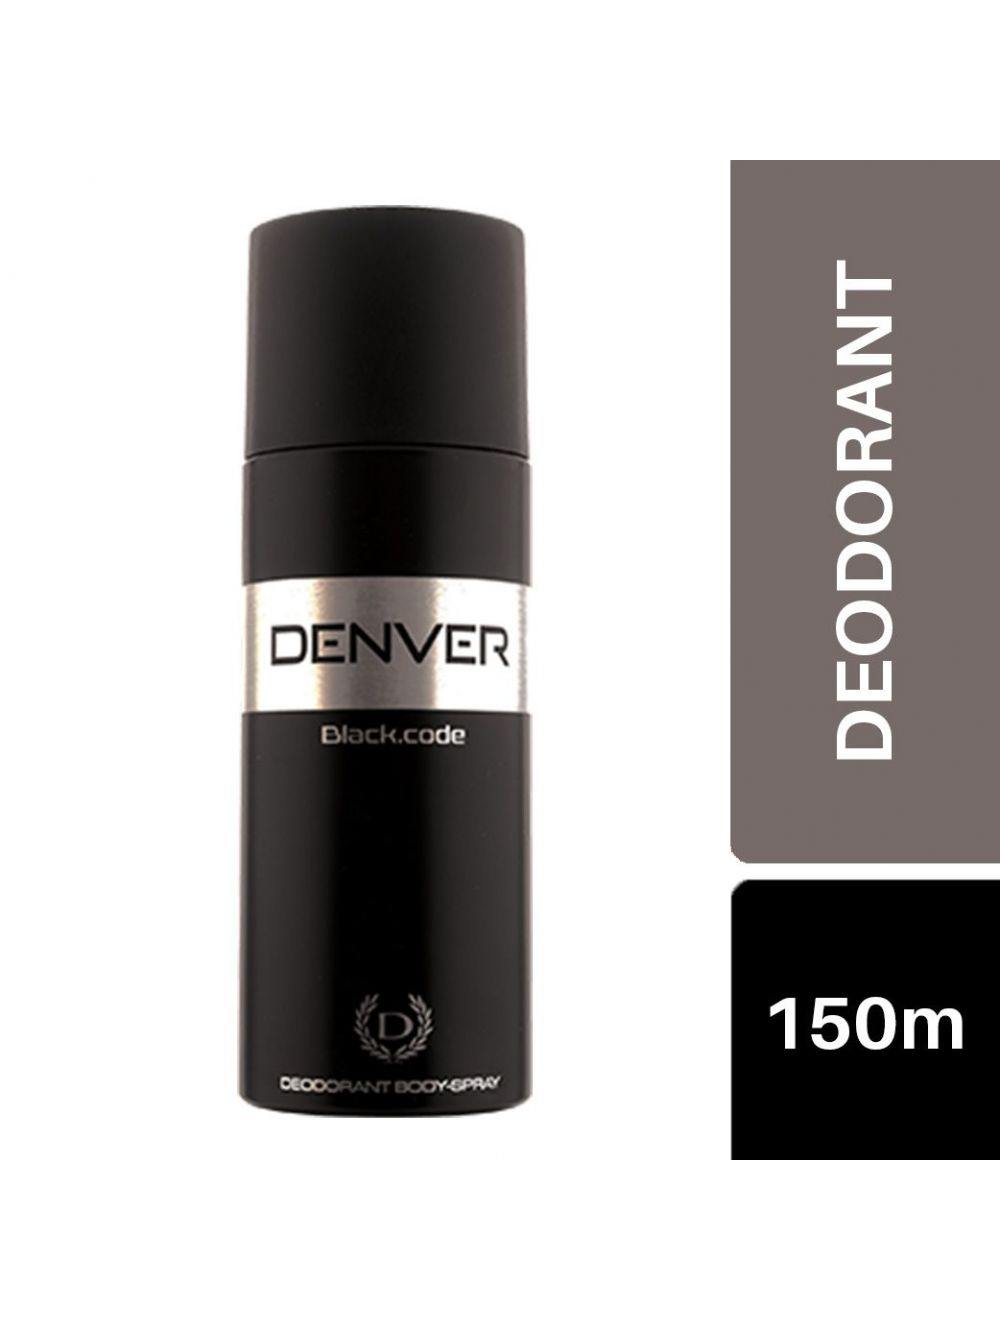 Denver Black.code Deodorant Body Spray (150ml) - Niram